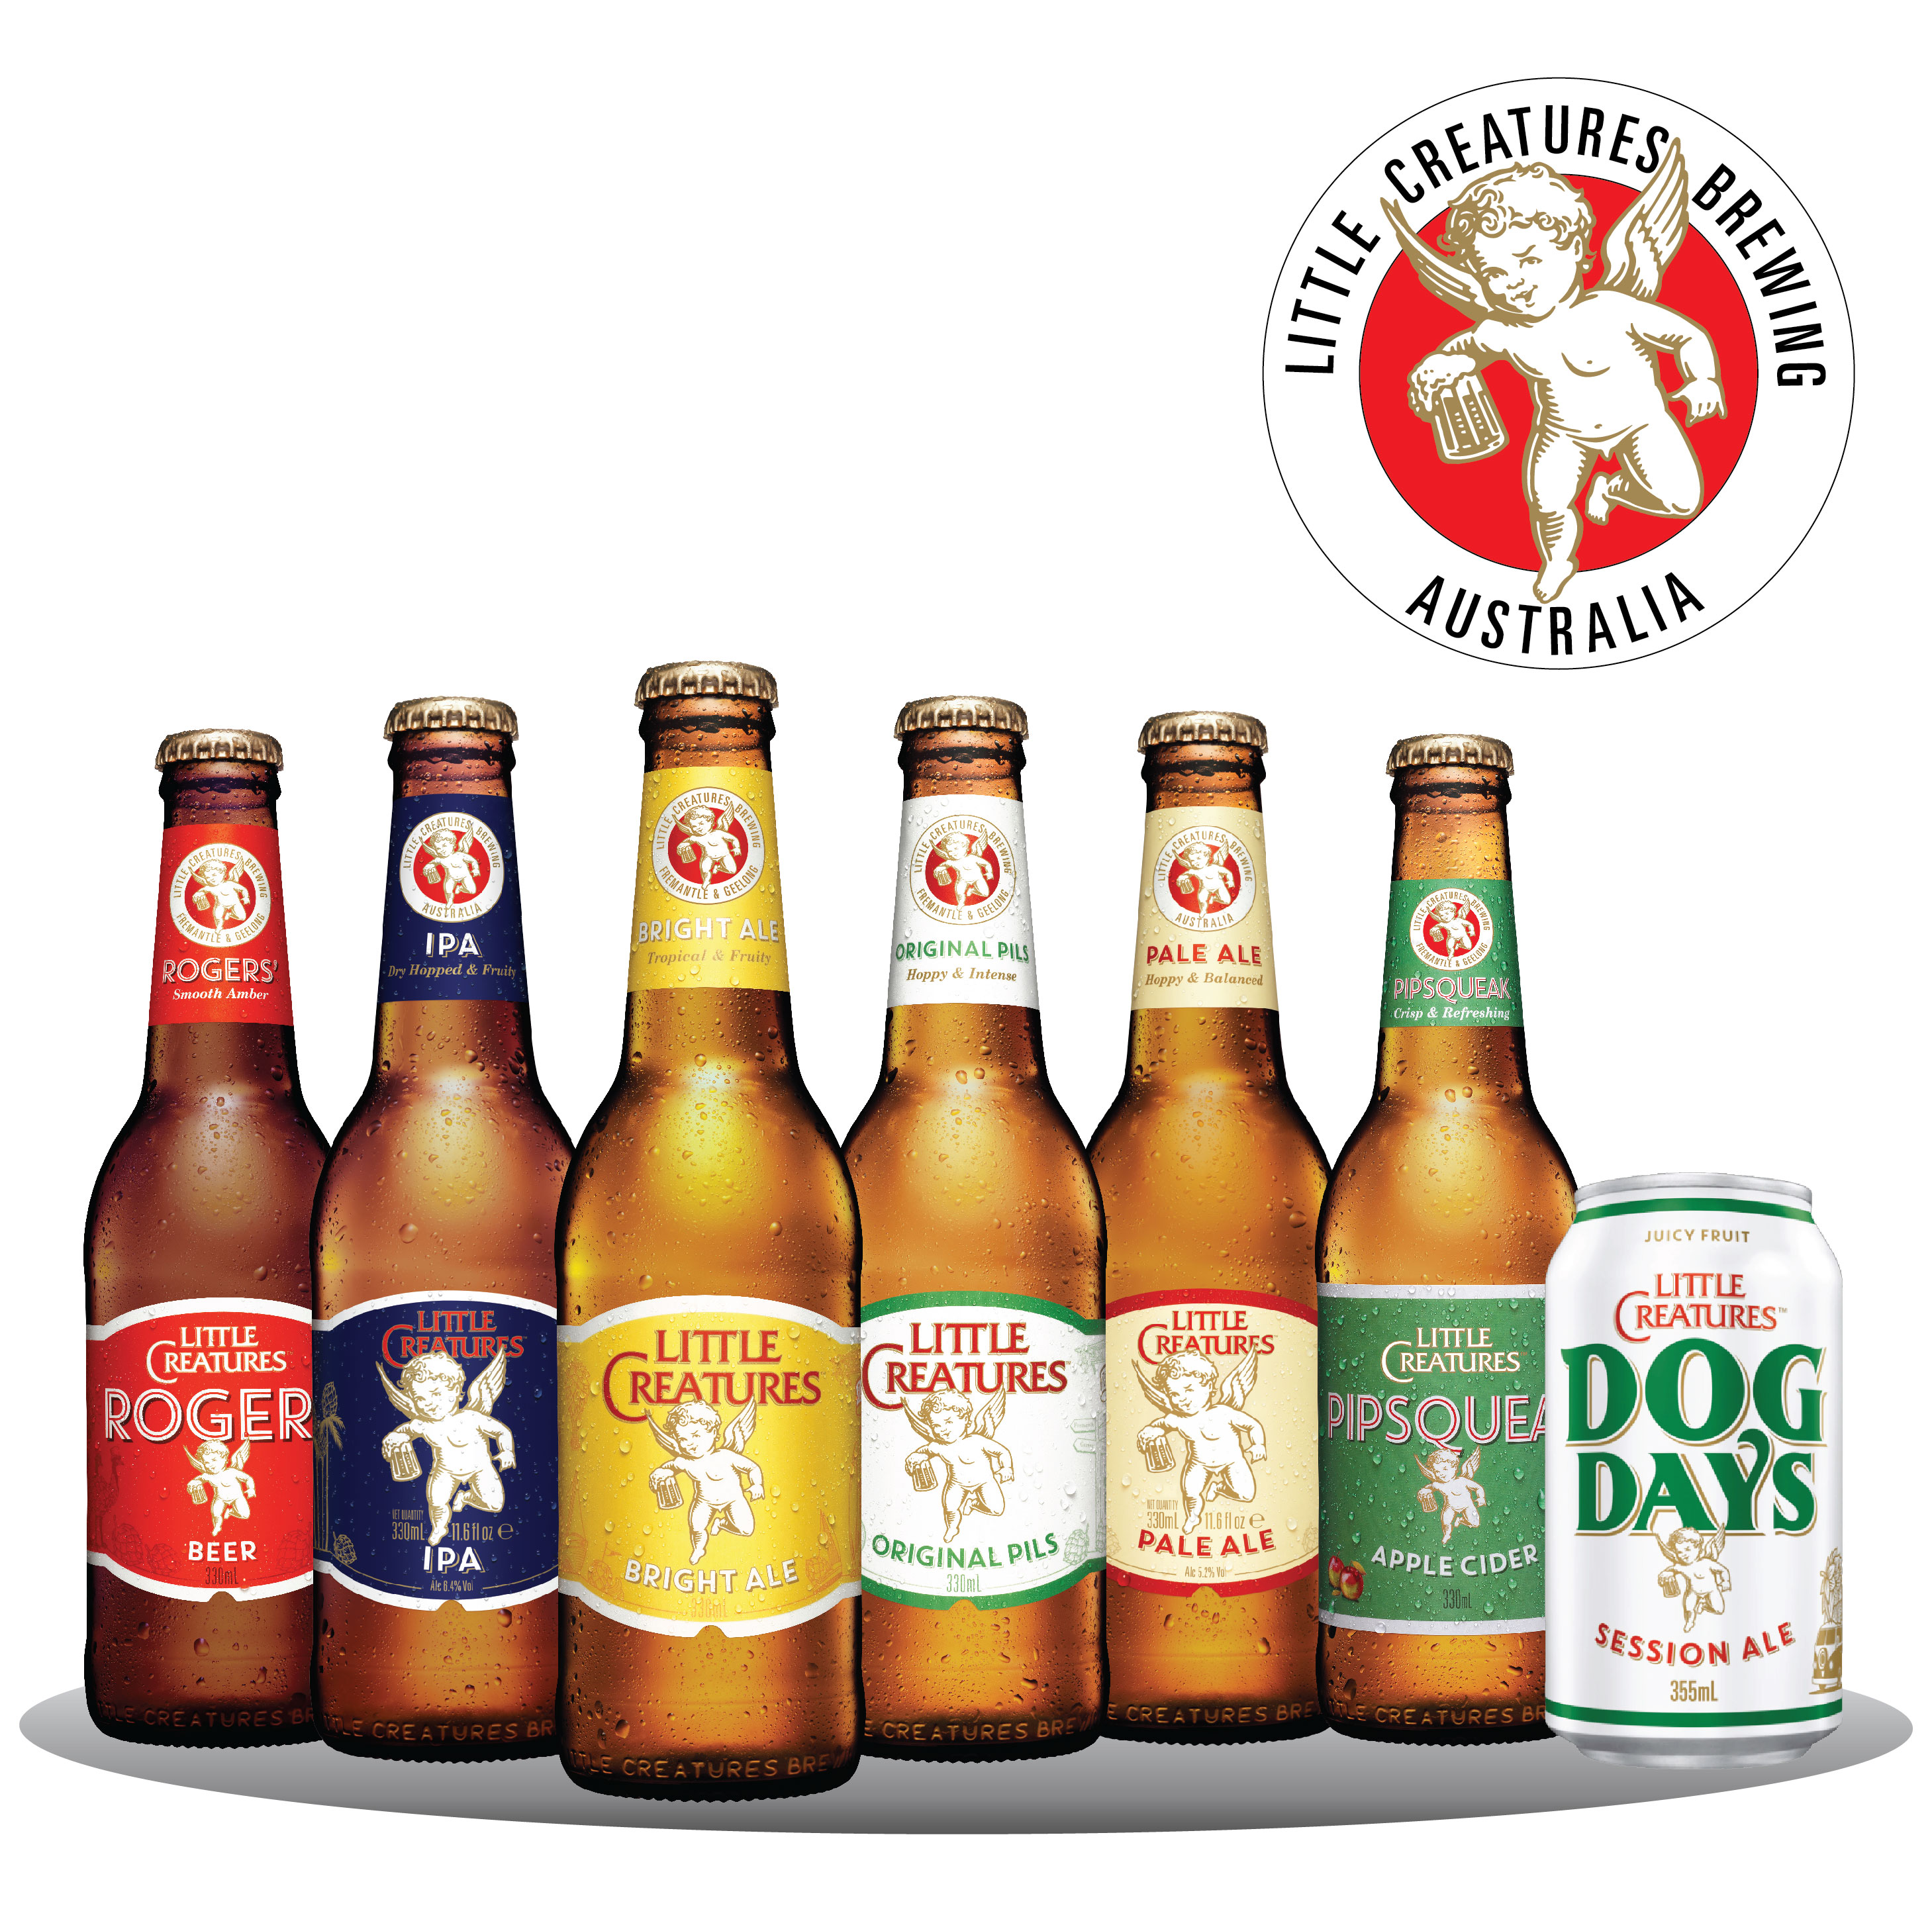 Gallery Pacific Beverages Premium Beer Importer Pacific Beverages Premium Beer Importer